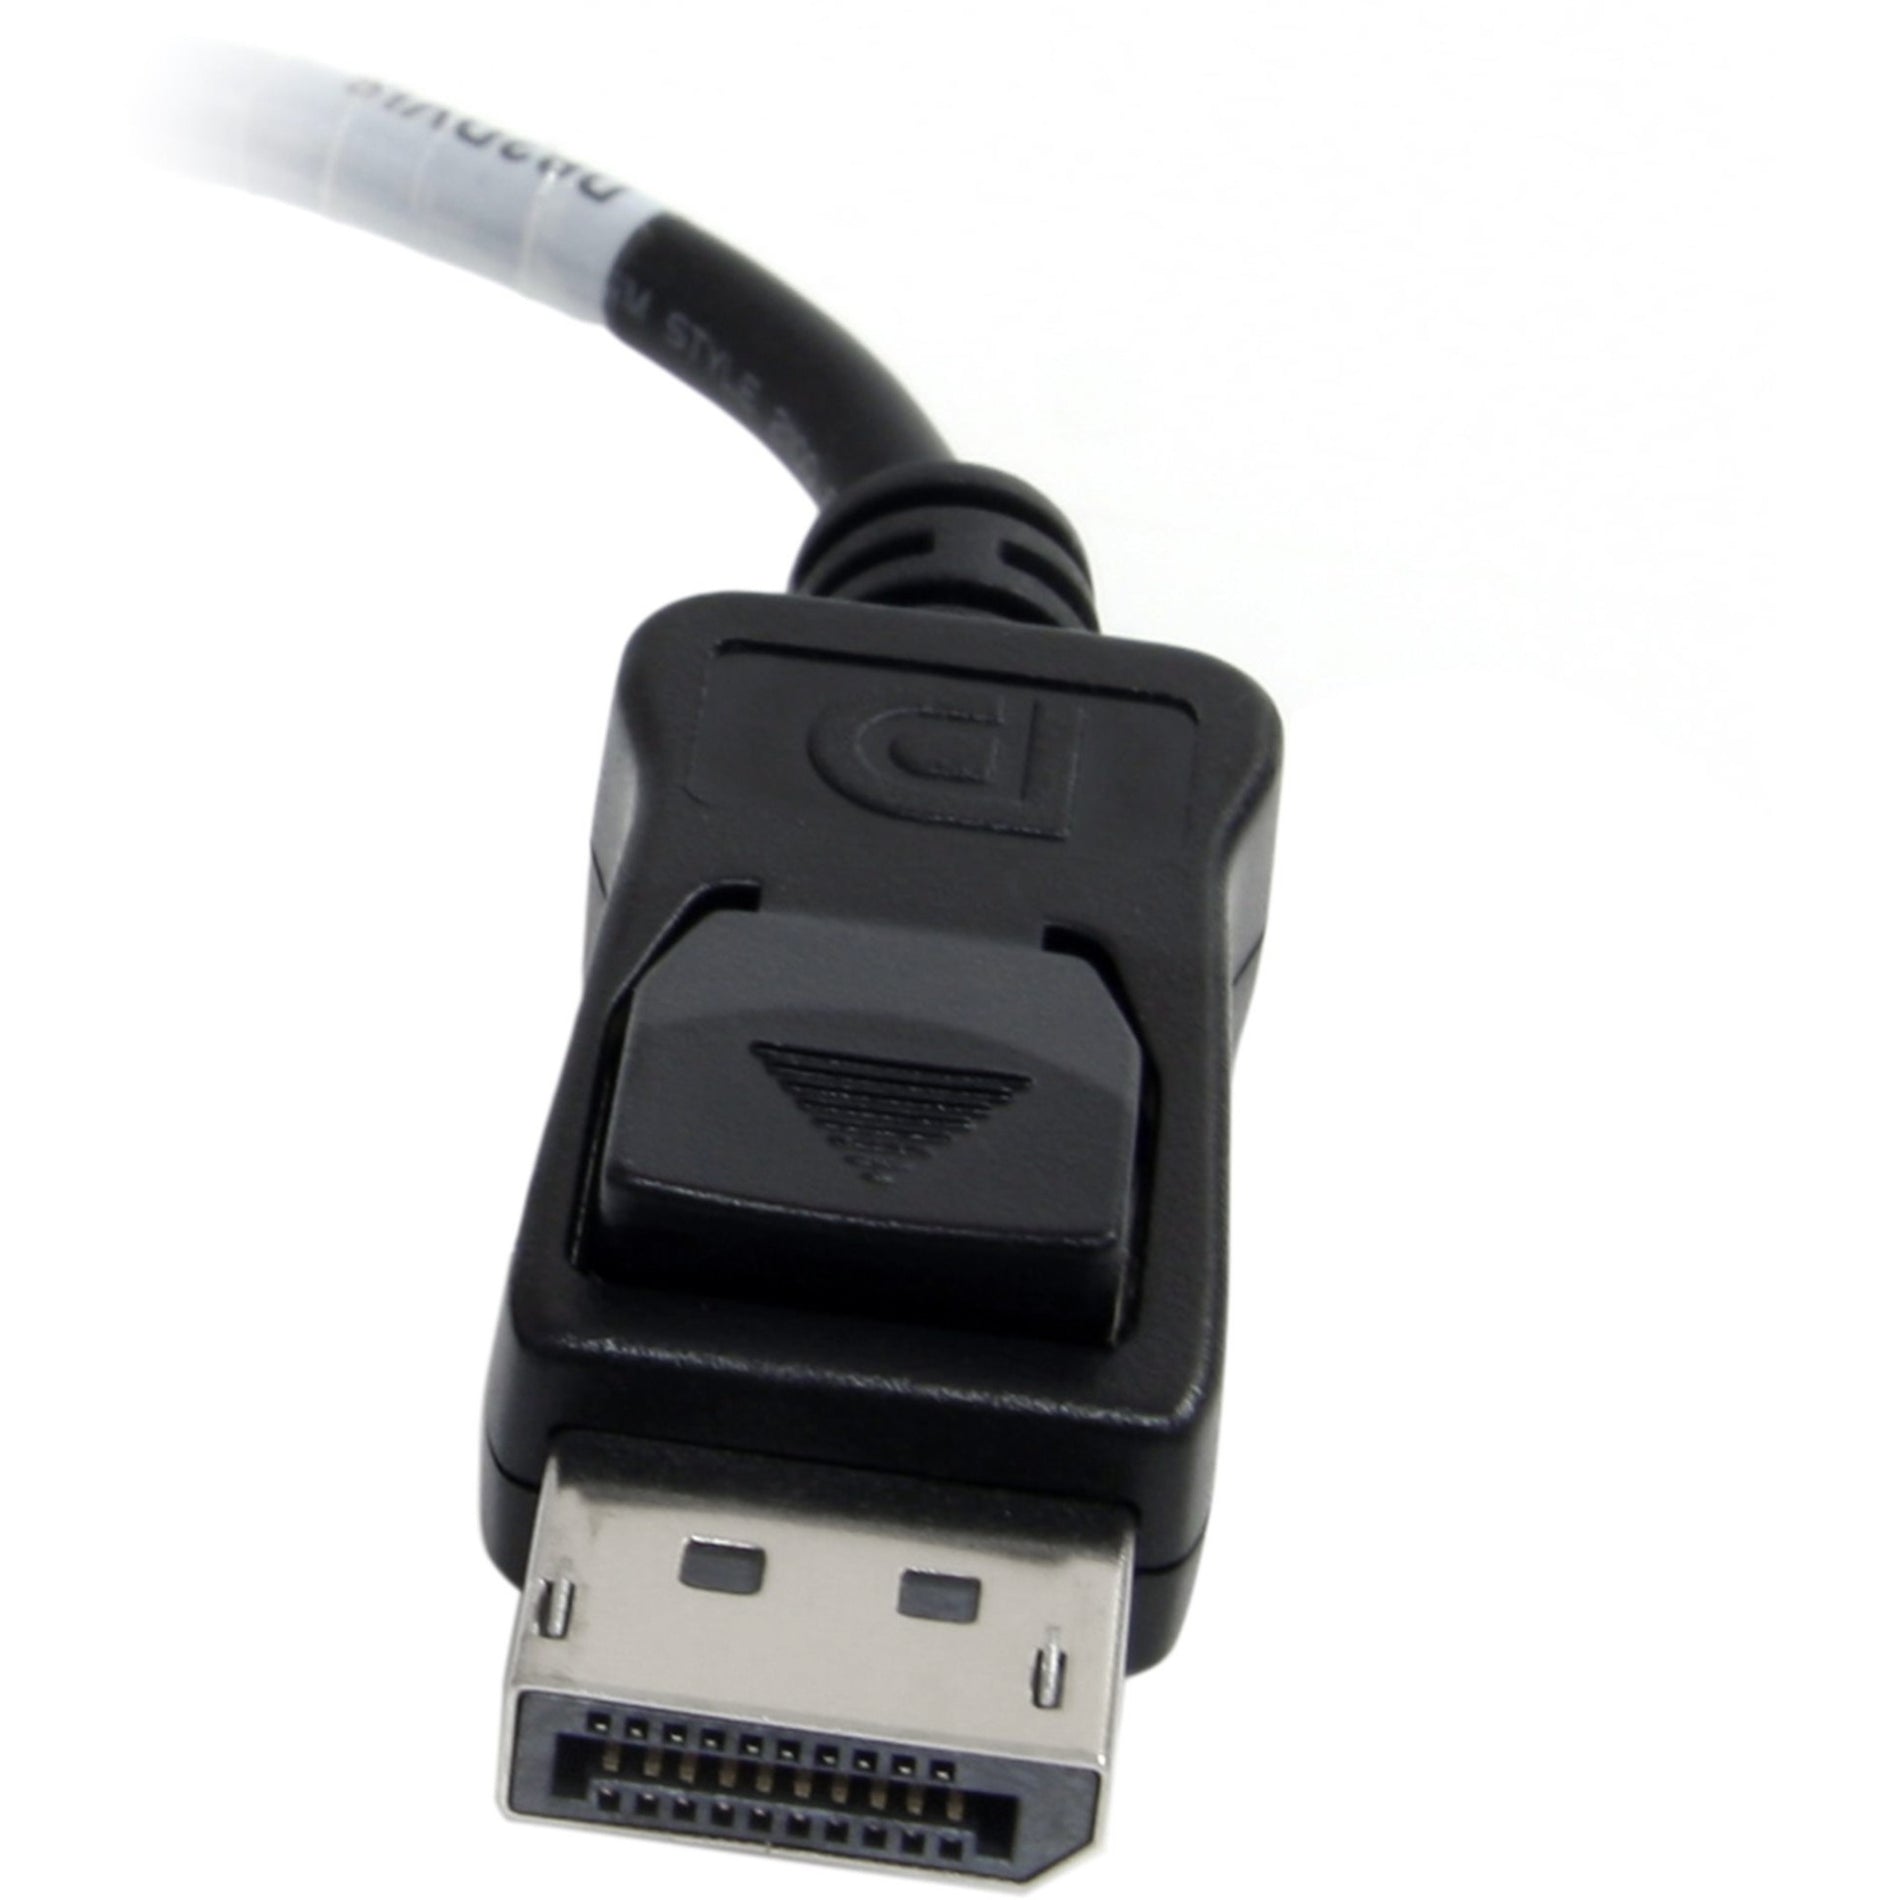 Adaptador de Video DisplayPort a DVI StarTech.com Adaptador de Video Activo HDCP 1.3